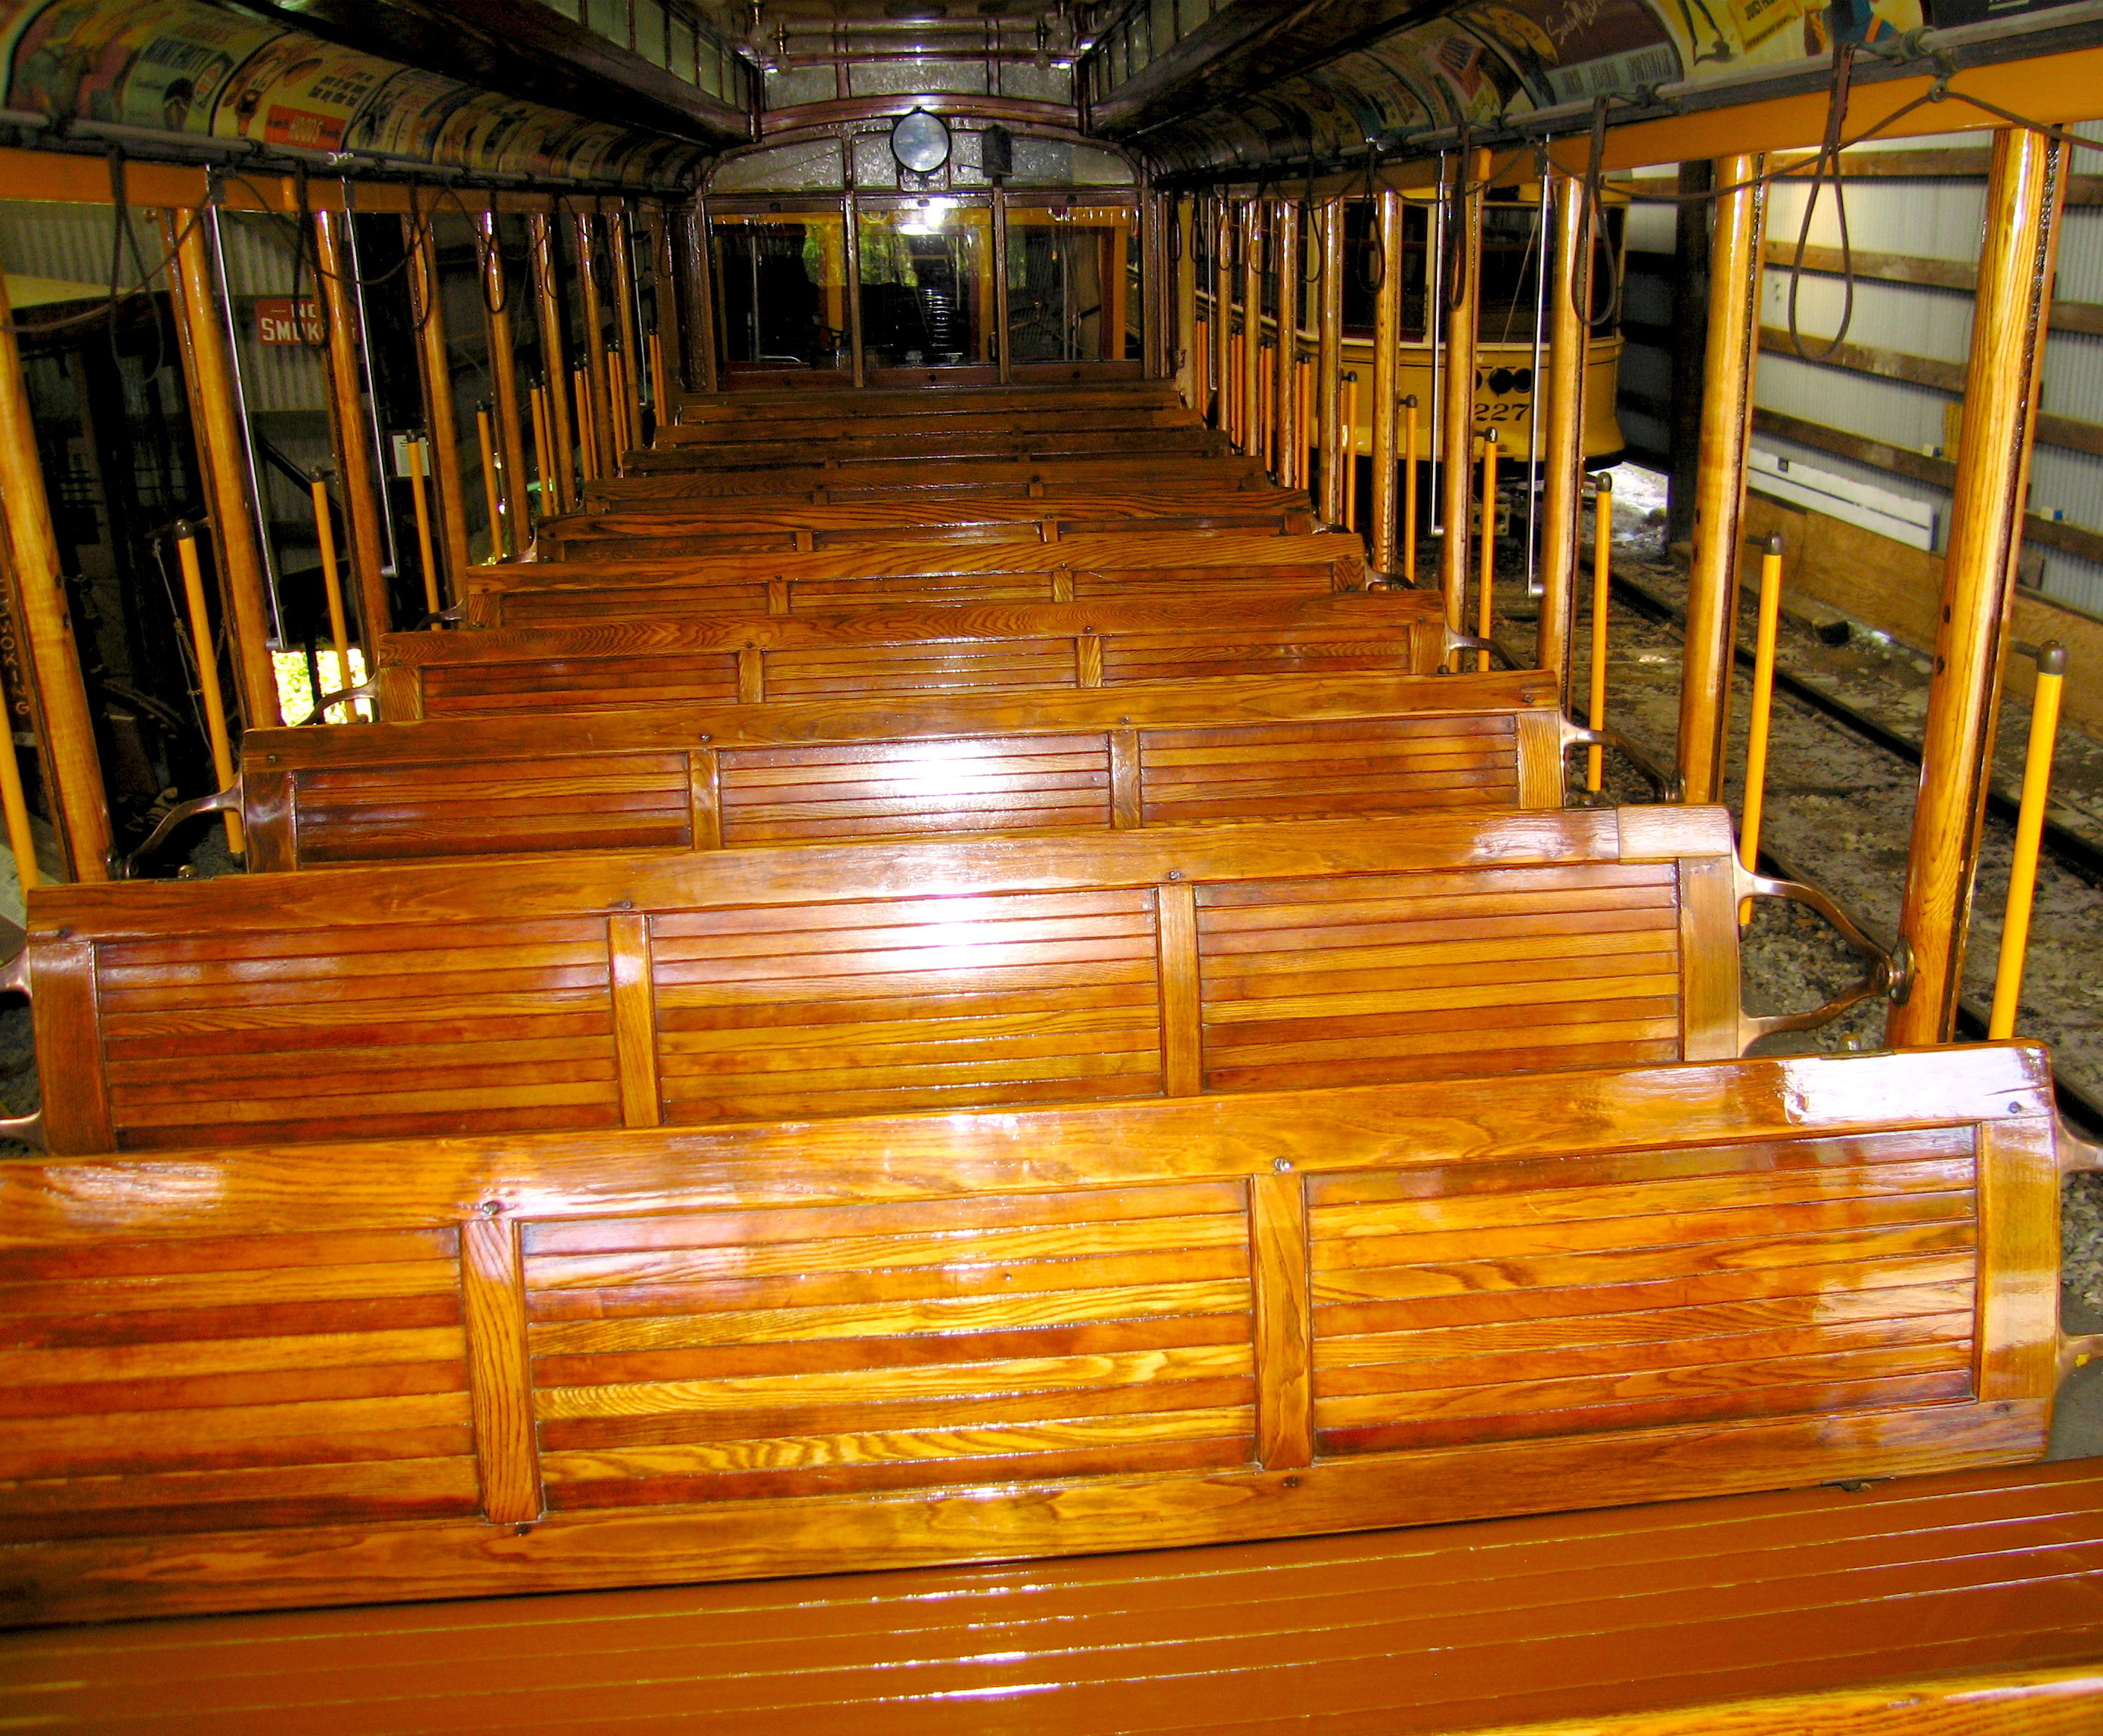 Seashore Trolley Museum, restored open car 838 interior